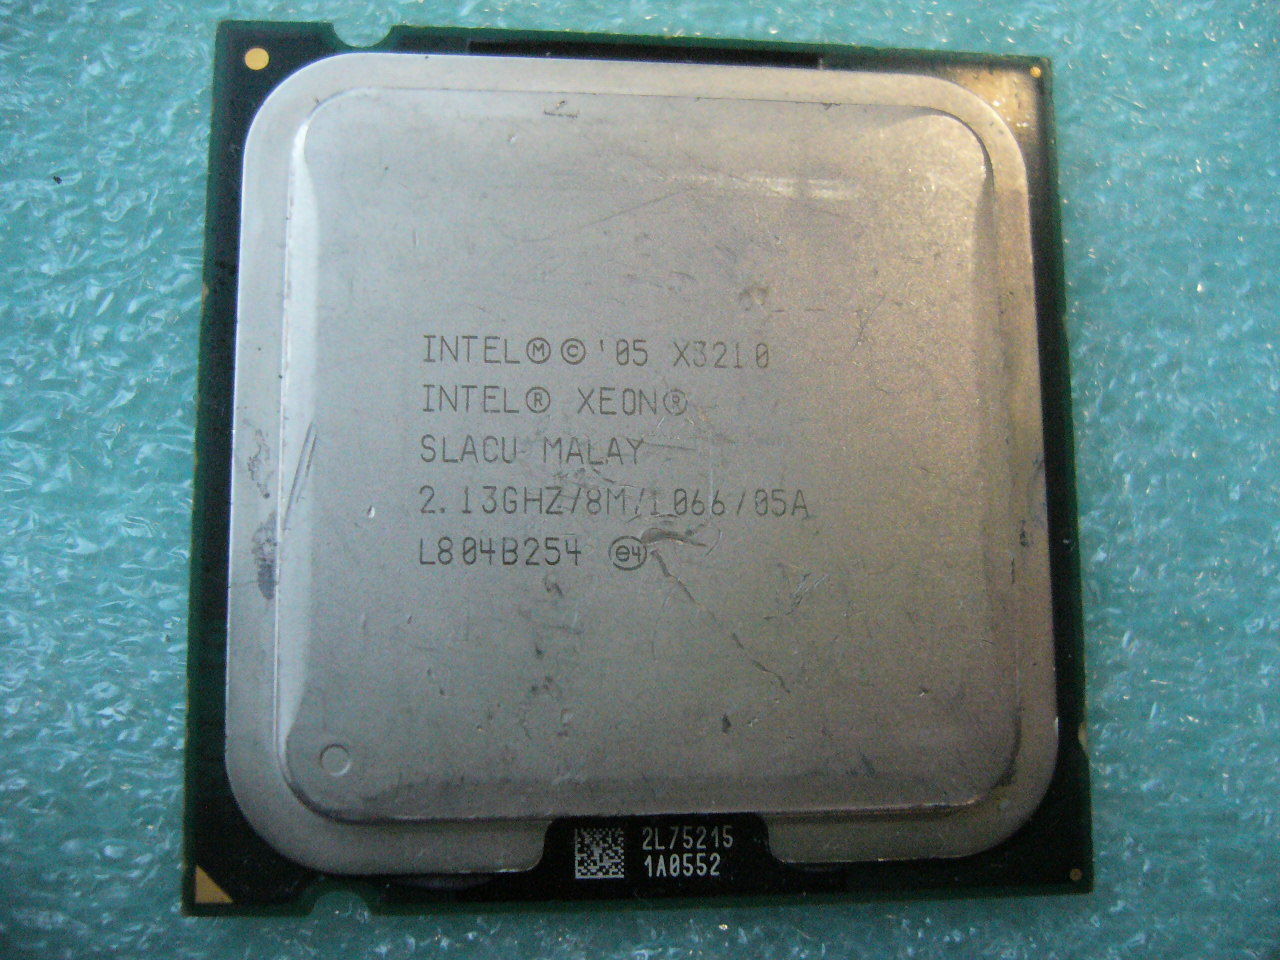 QTY 1x INTEL Quad Cores X3210 CPU 2.13GHz/8MB/1066Mhz LGA775 SLACU